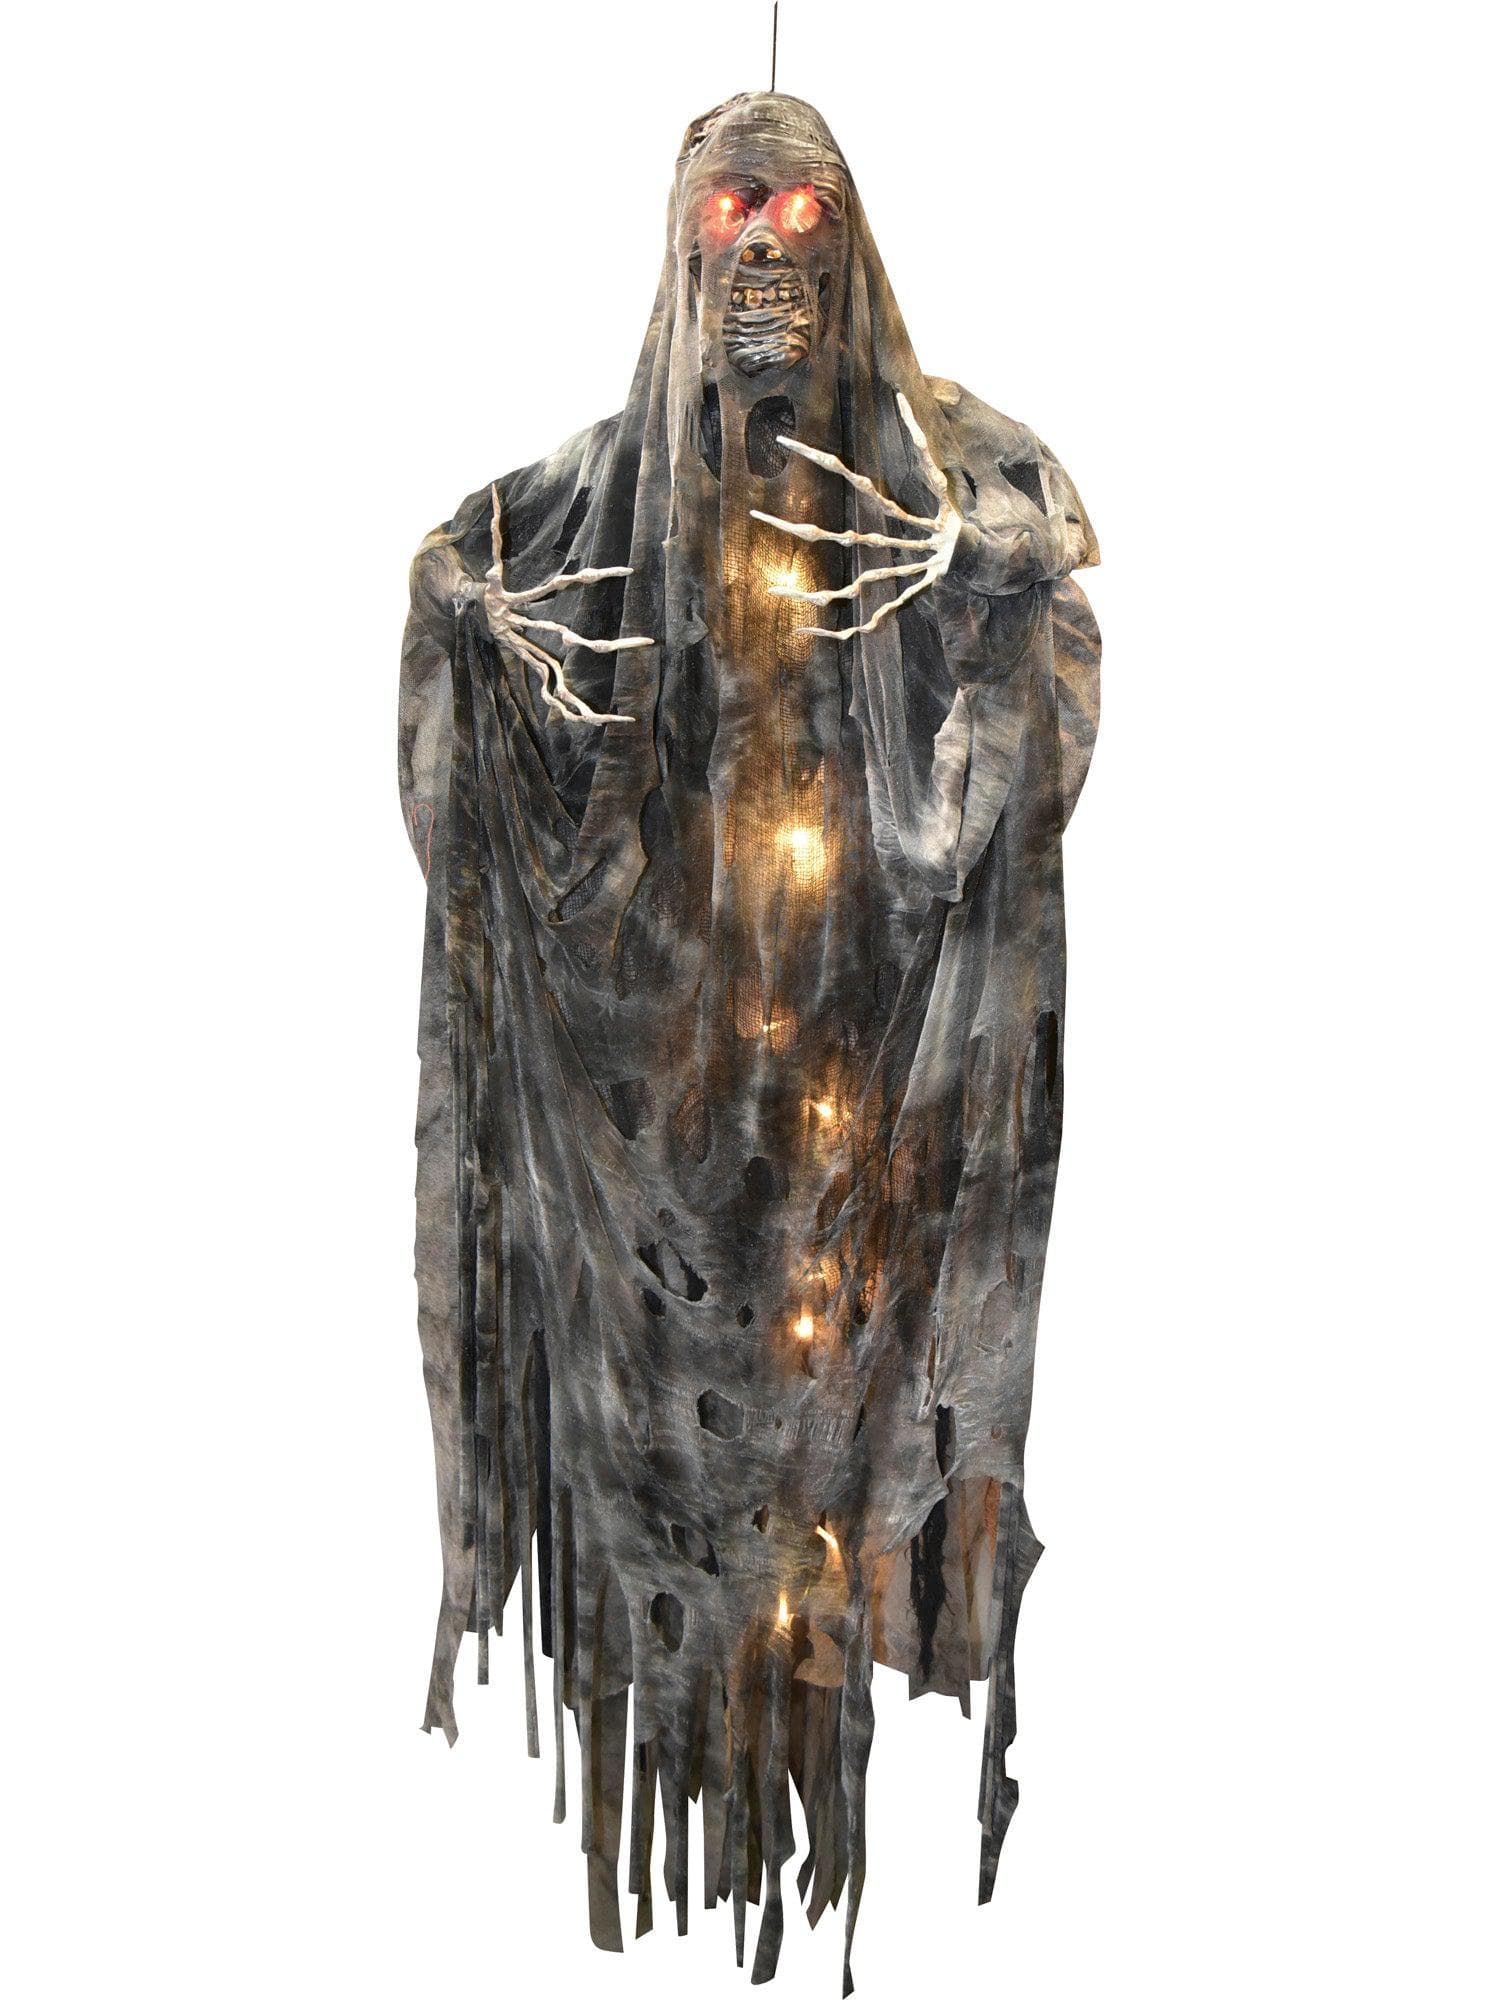 6 Foot Hanging Mummy Light Up Animated Prop - costumes.com